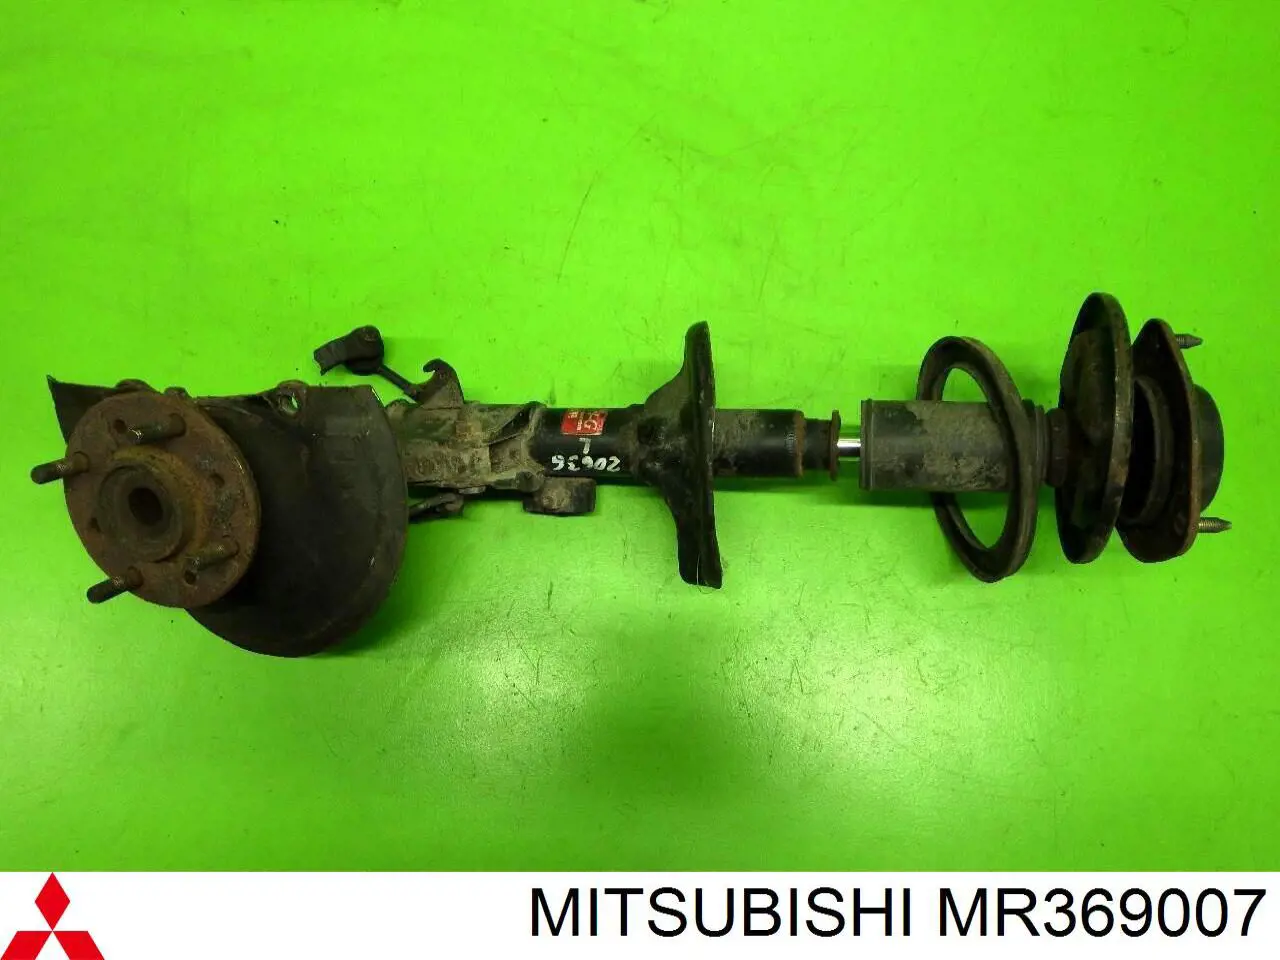 MR369007 Mitsubishi амортизатор передний левый